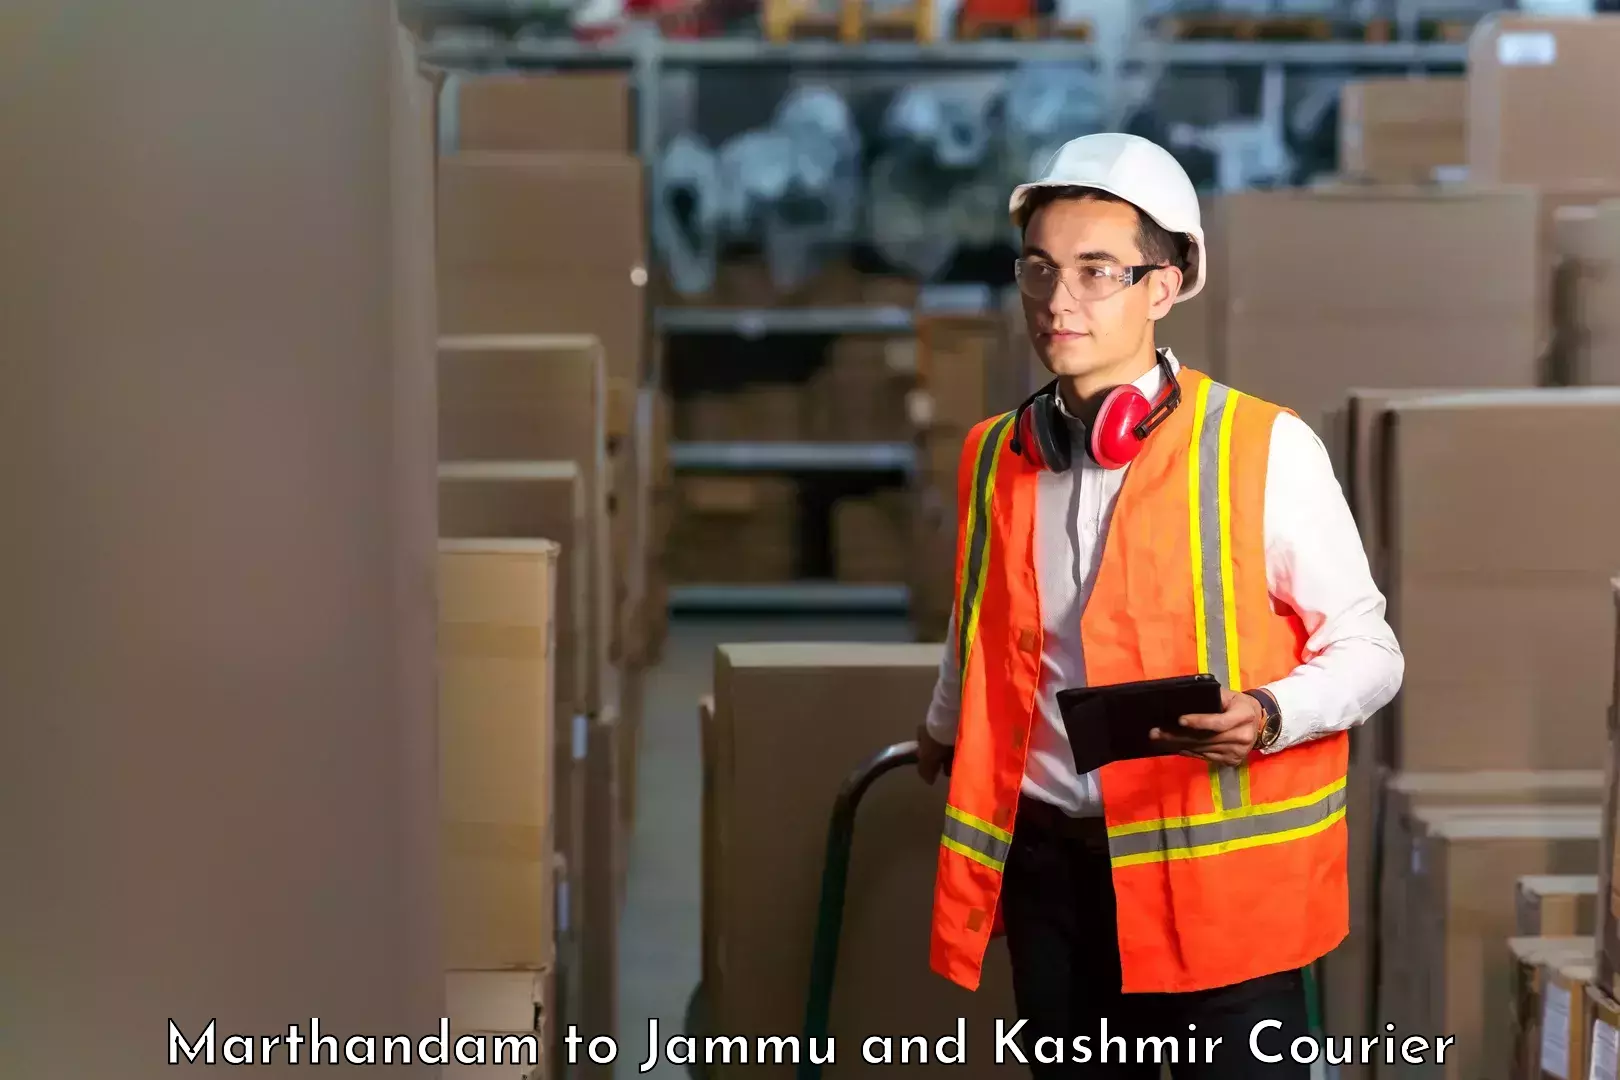 Courier service innovation Marthandam to Jammu and Kashmir